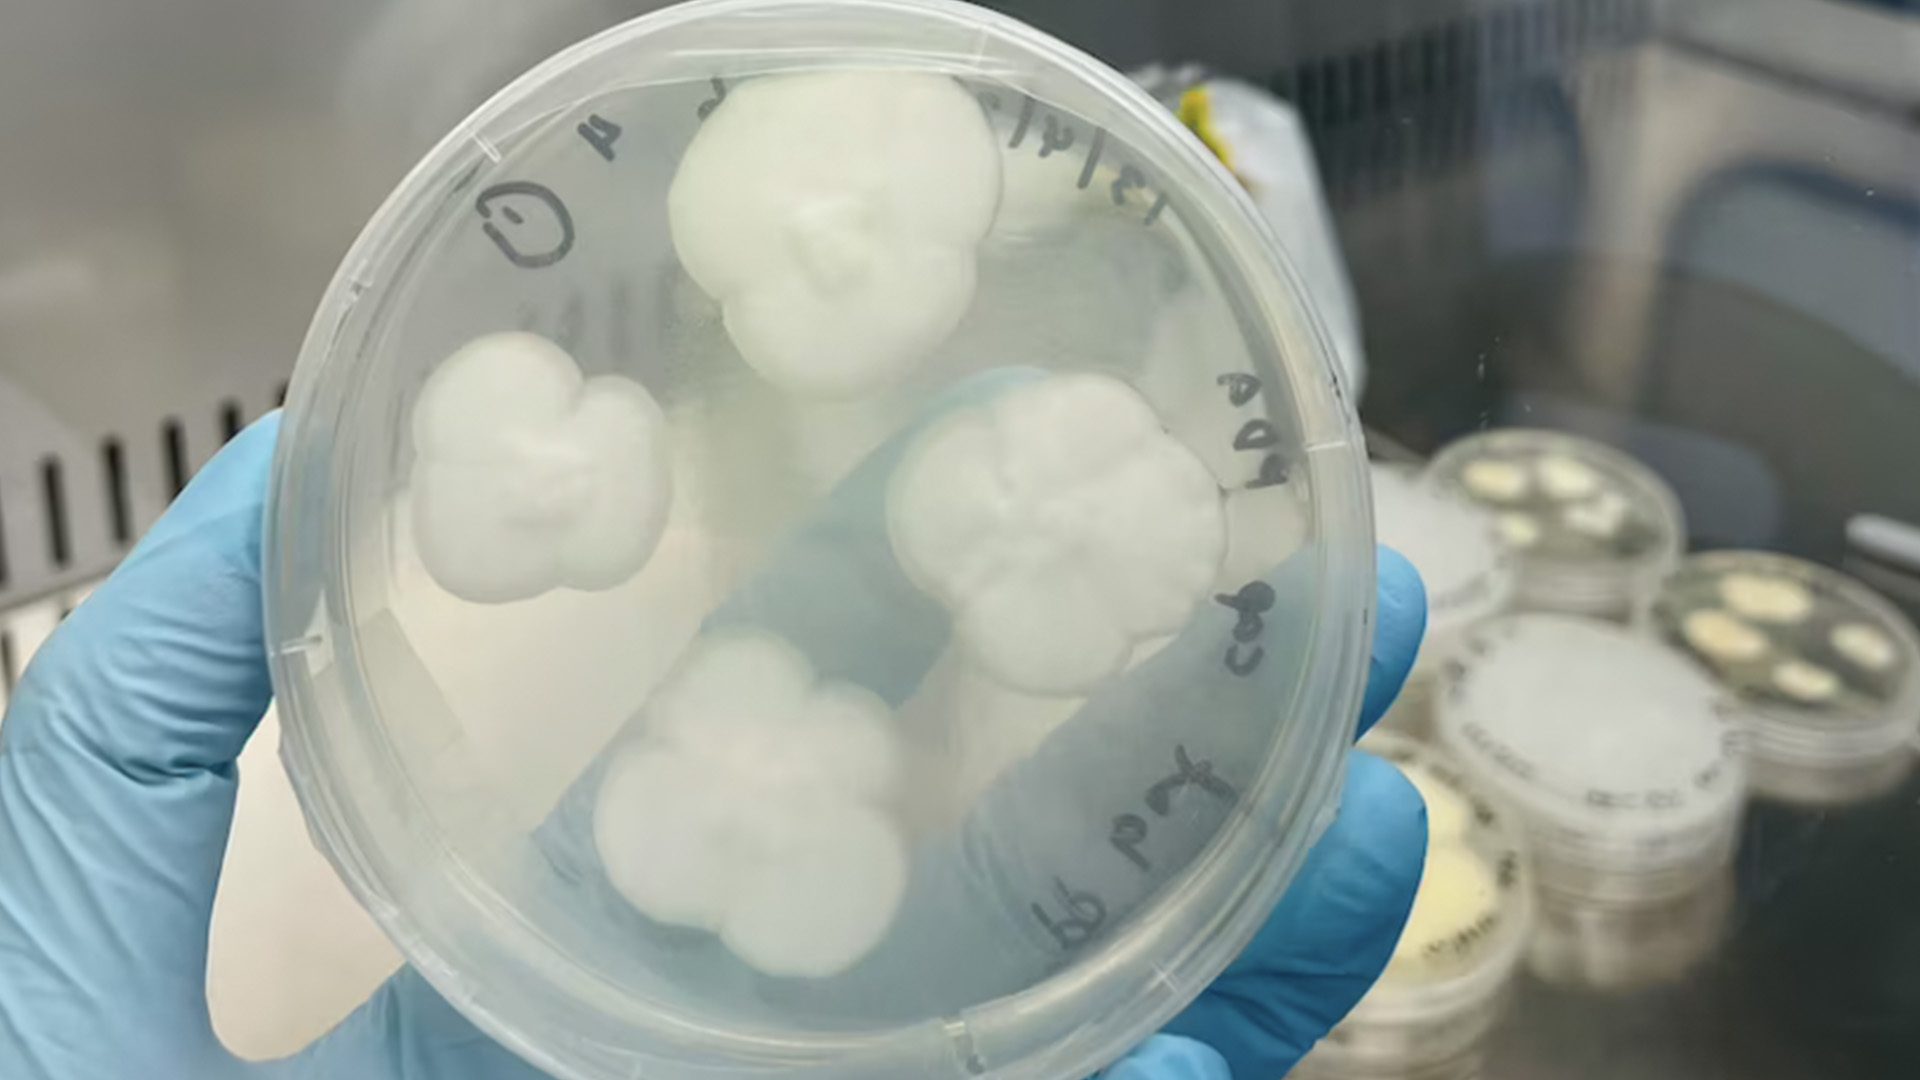 fungus can break down polypropylene plastic under UV light